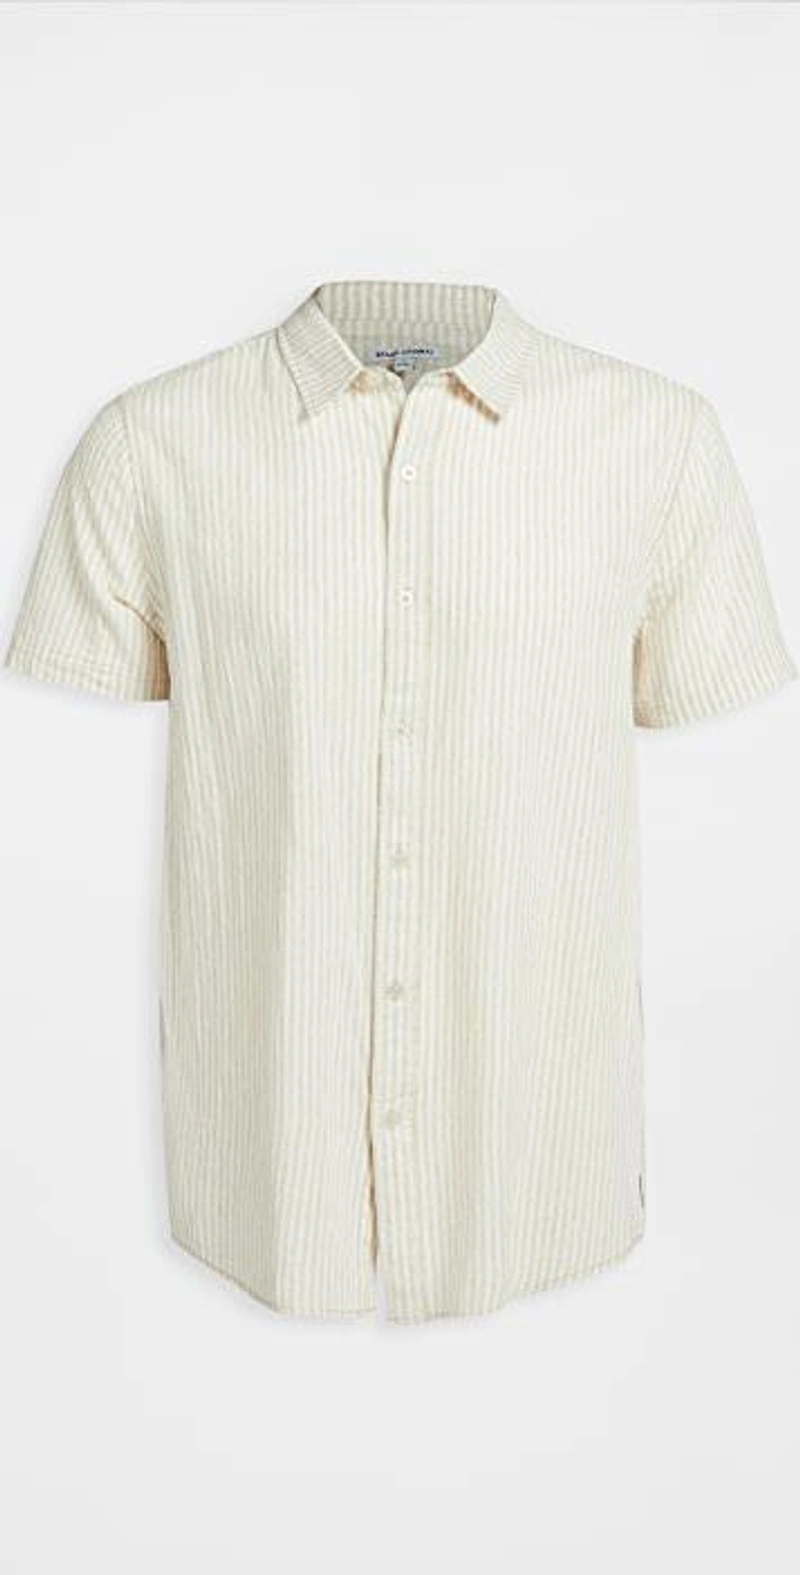 shopbop.com's Posts | Wearing: Banks Journal Teen Shirt; Deus Ex Machina 2 Pack T-shirt; Banks Journal Big Bear Fleece Shorts